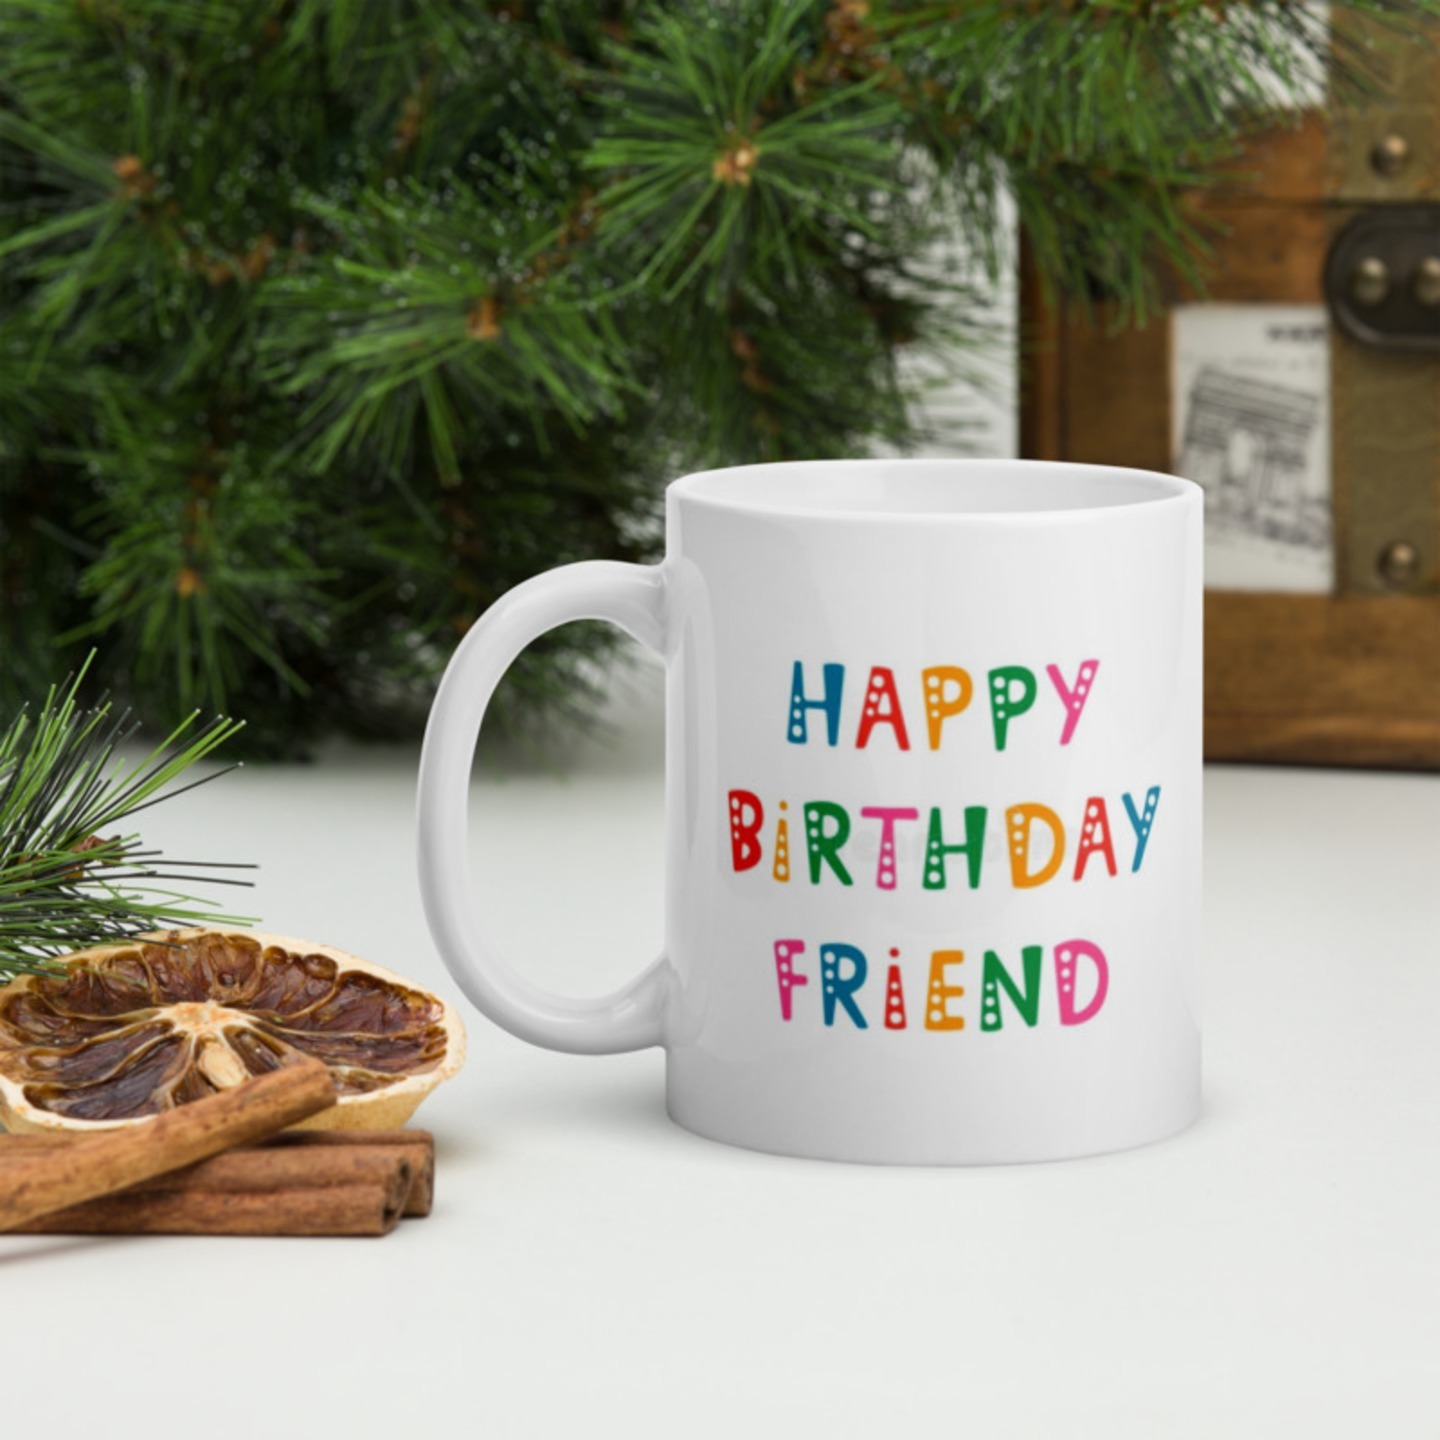 Ceramic Mug - Happy birthday friend